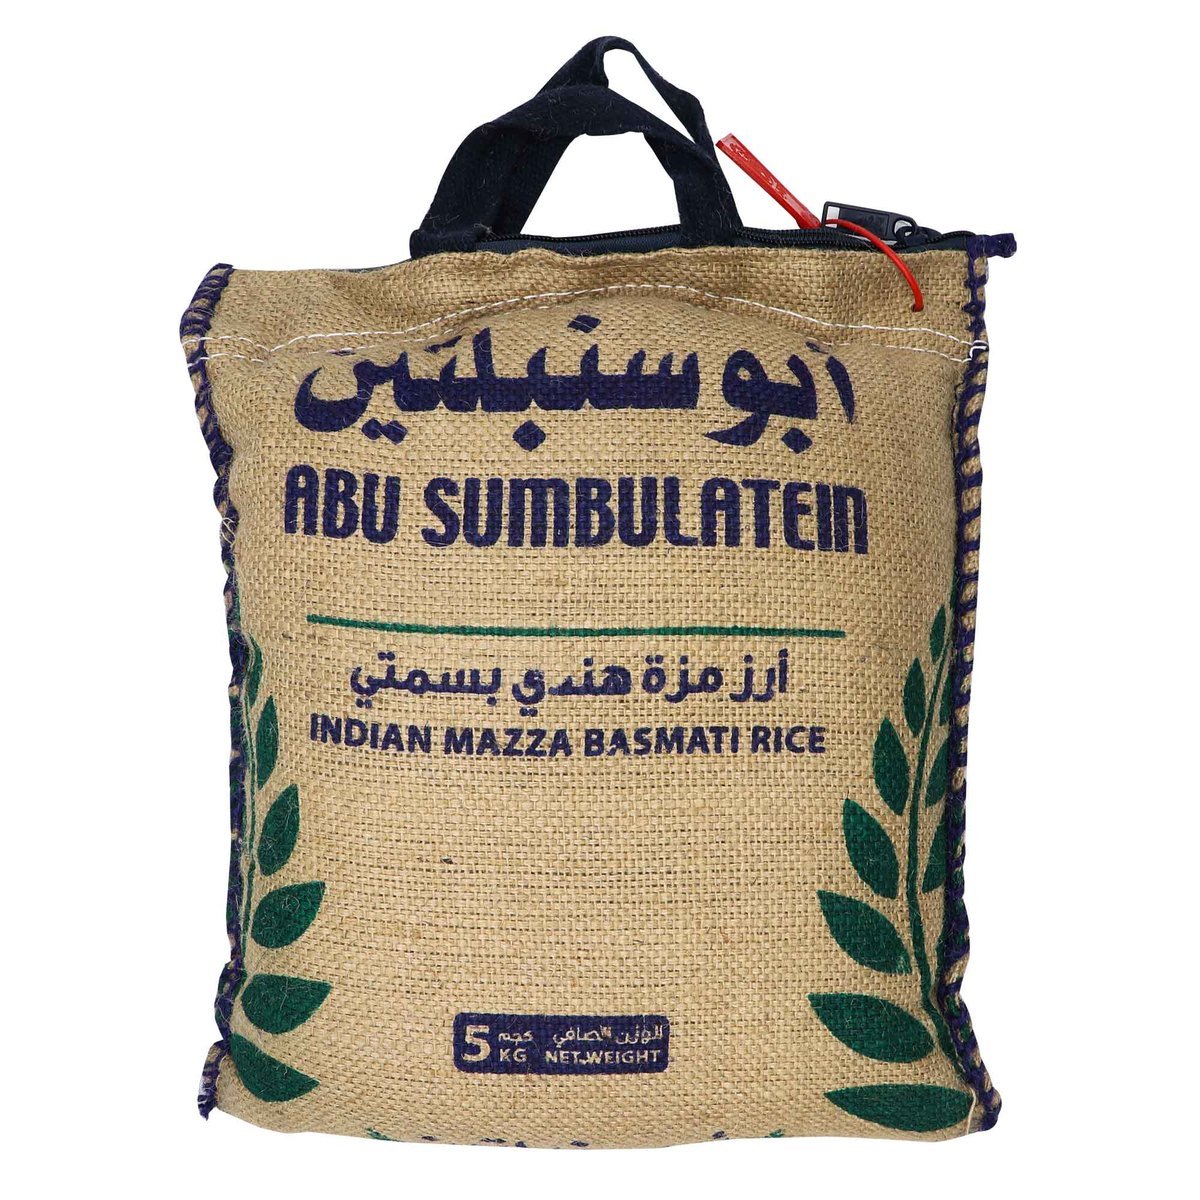 Abu Sumbulatein Indian Mazza Basmati Rice 5kg